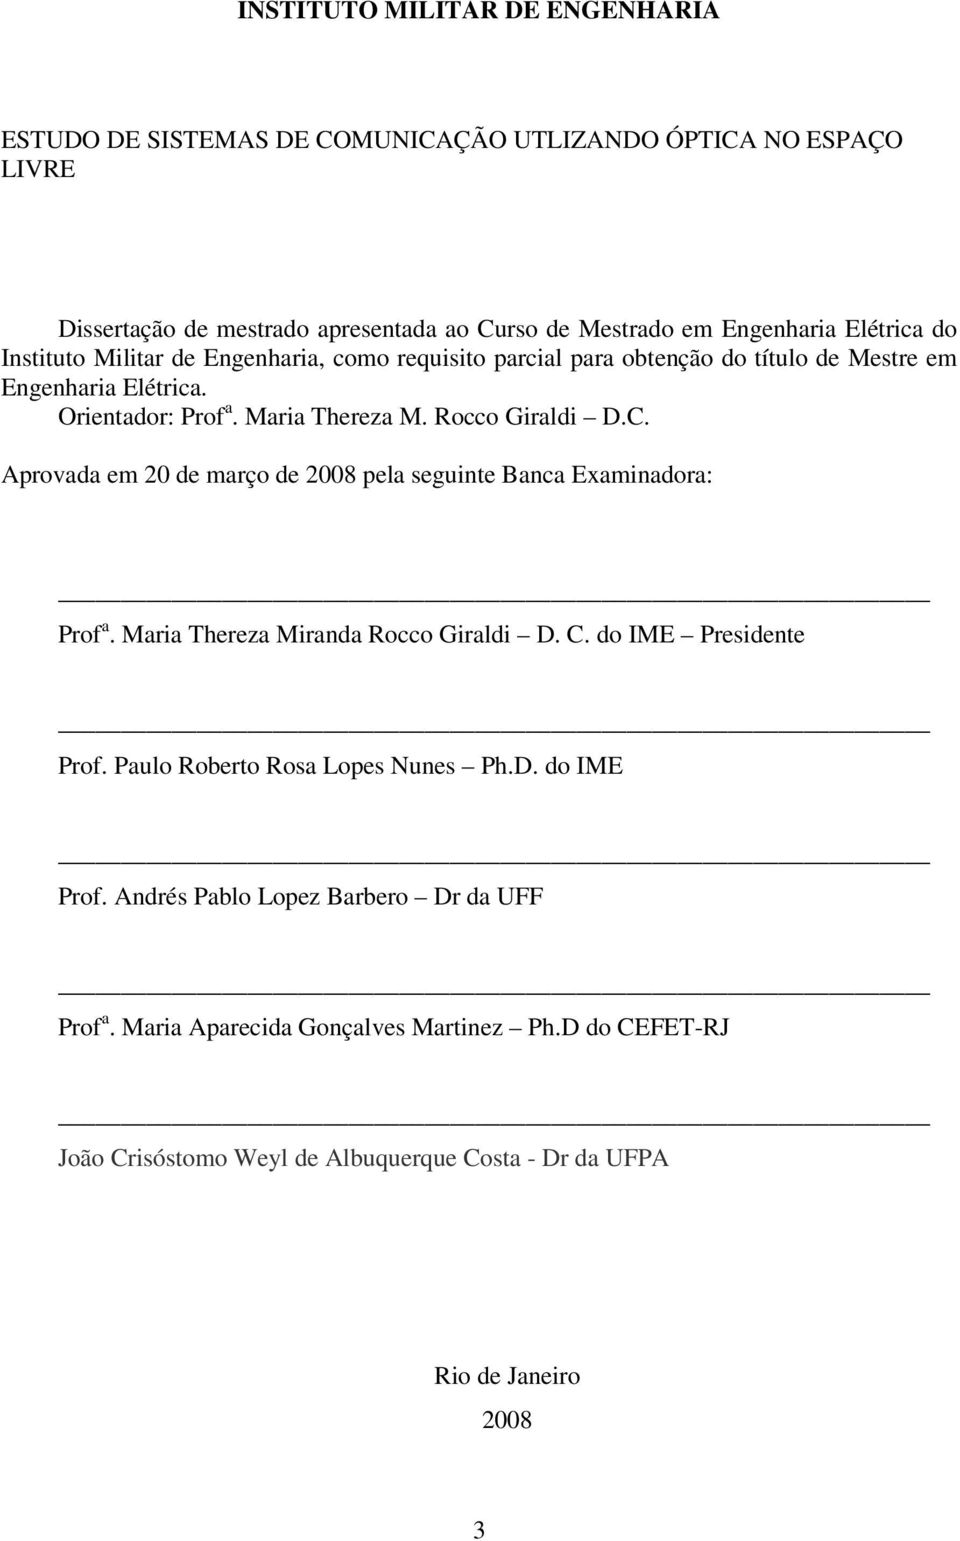 Aprovada em 20 de março de 2008 pela seguinte Banca Examinadora: Prof a. Maria Thereza Miranda Rocco Giraldi D. C. do IME Presidente Prof. Paulo Roberto Rosa Lopes Nunes Ph.D. do IME Prof.